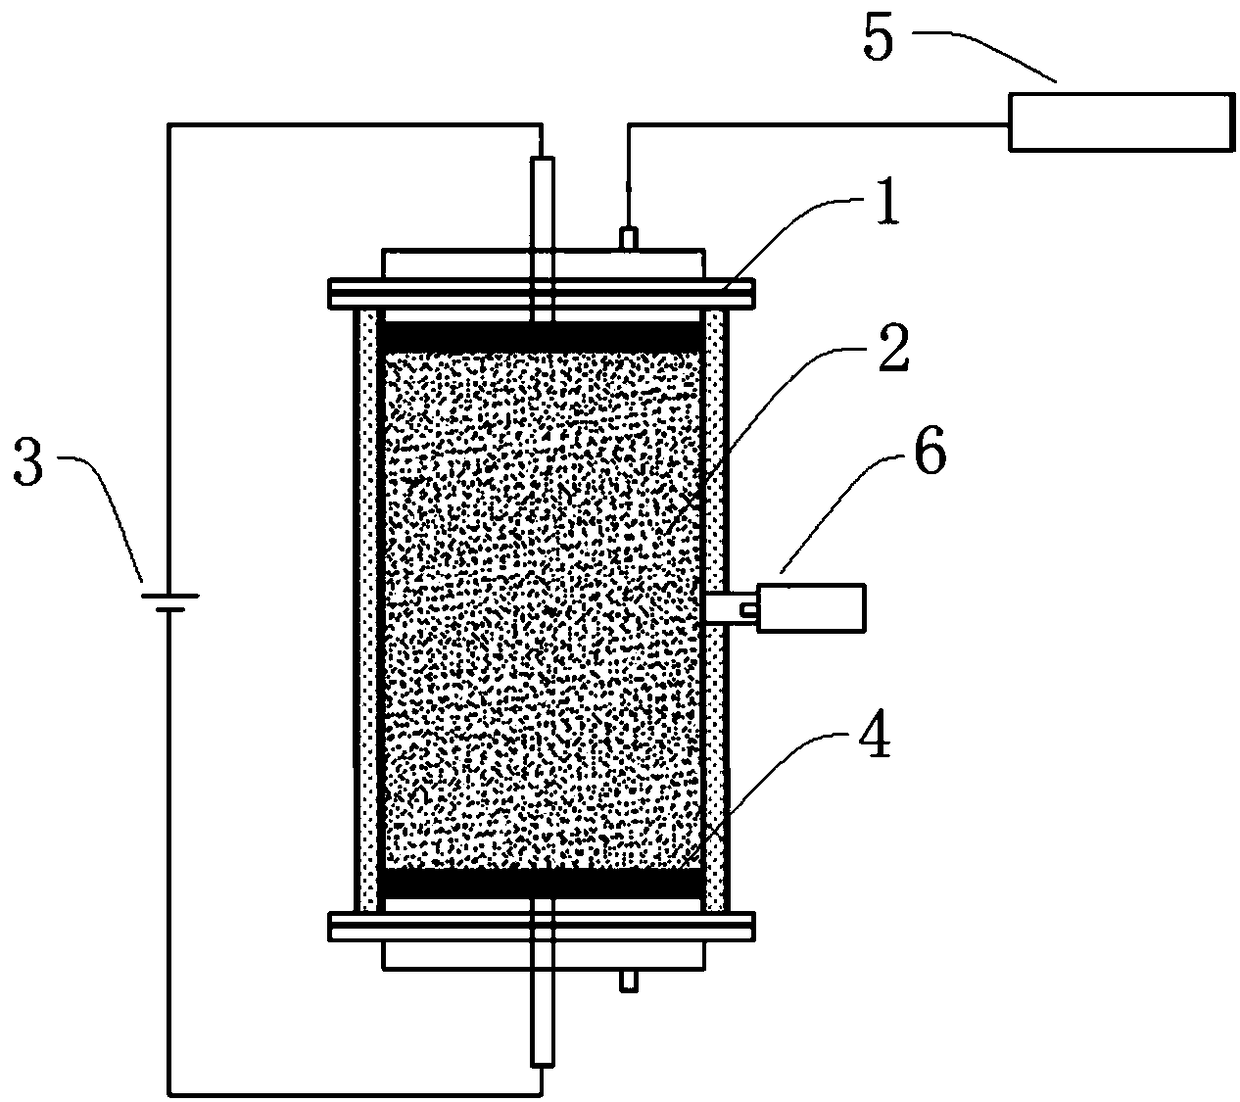 Carbon nano-tube purification method